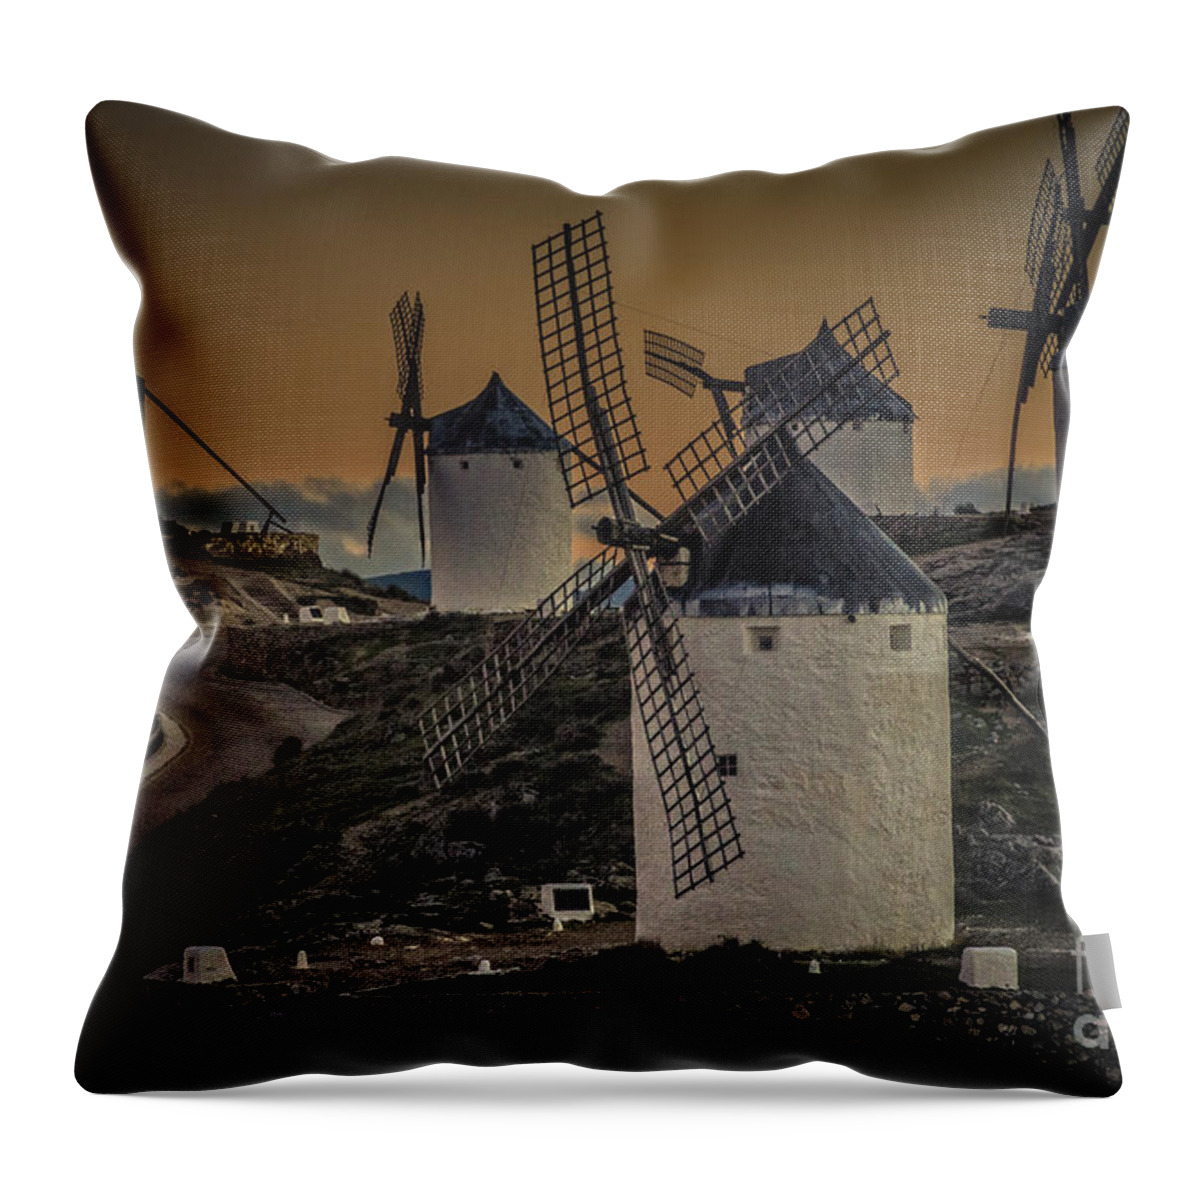 Windmills Throw Pillow featuring the photograph Consuegra Windmills 2 by Heiko Koehrer-Wagner